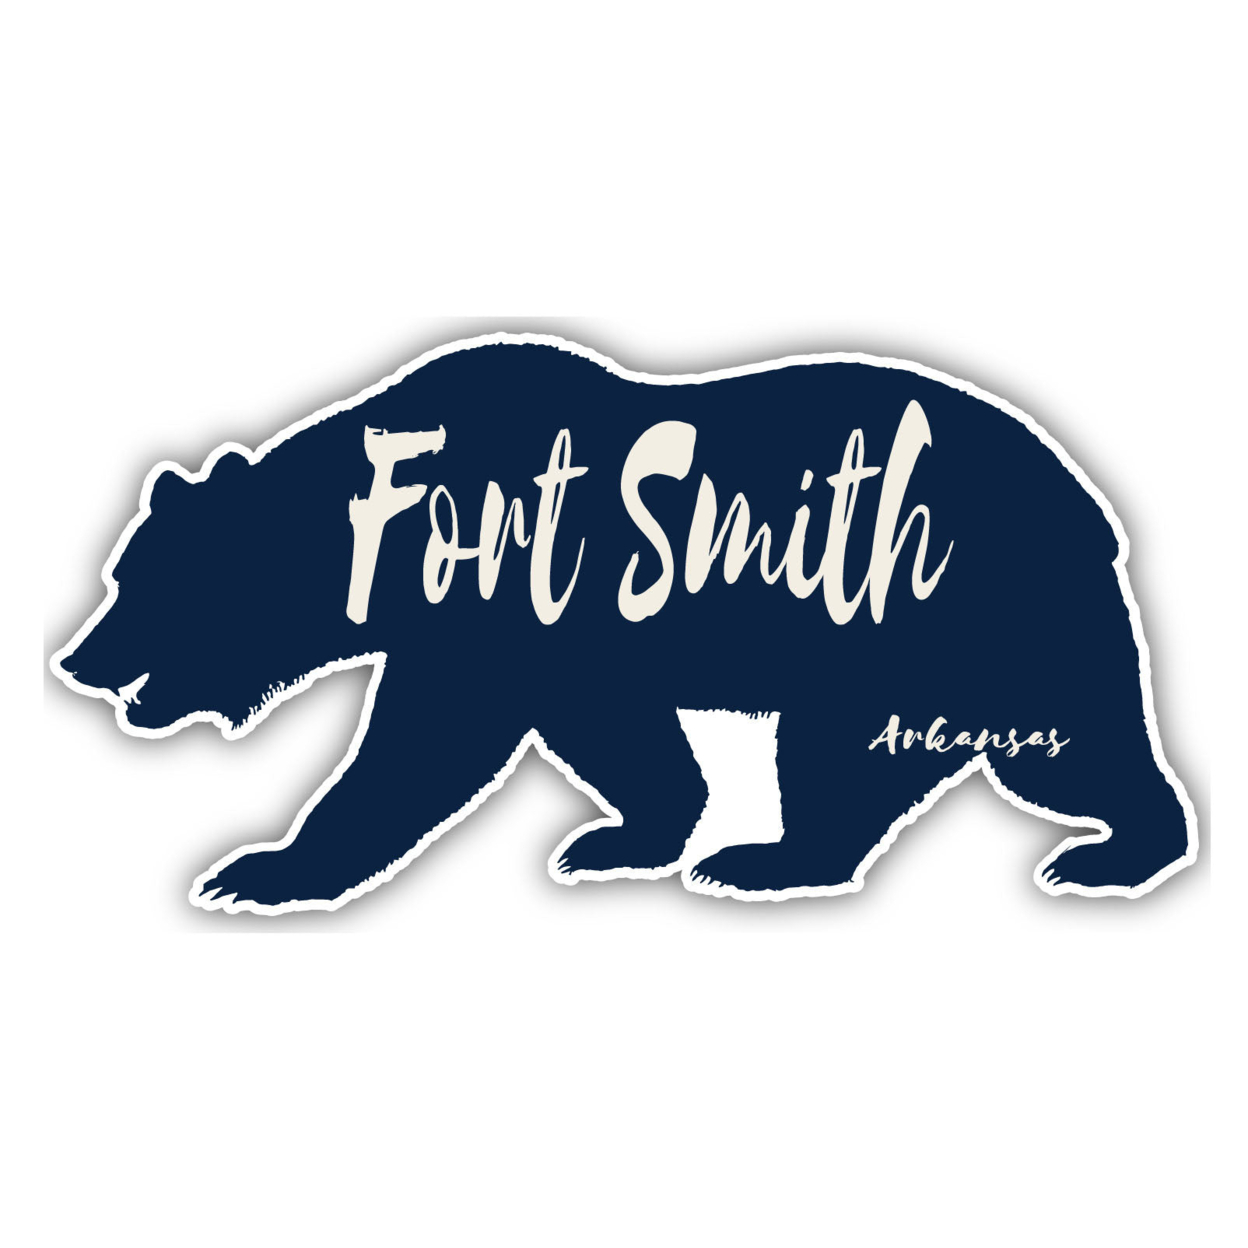 Fort Smith Arkansas Souvenir Decorative Stickers (Choose Theme And Size) - Single Unit, 4-Inch, Bear